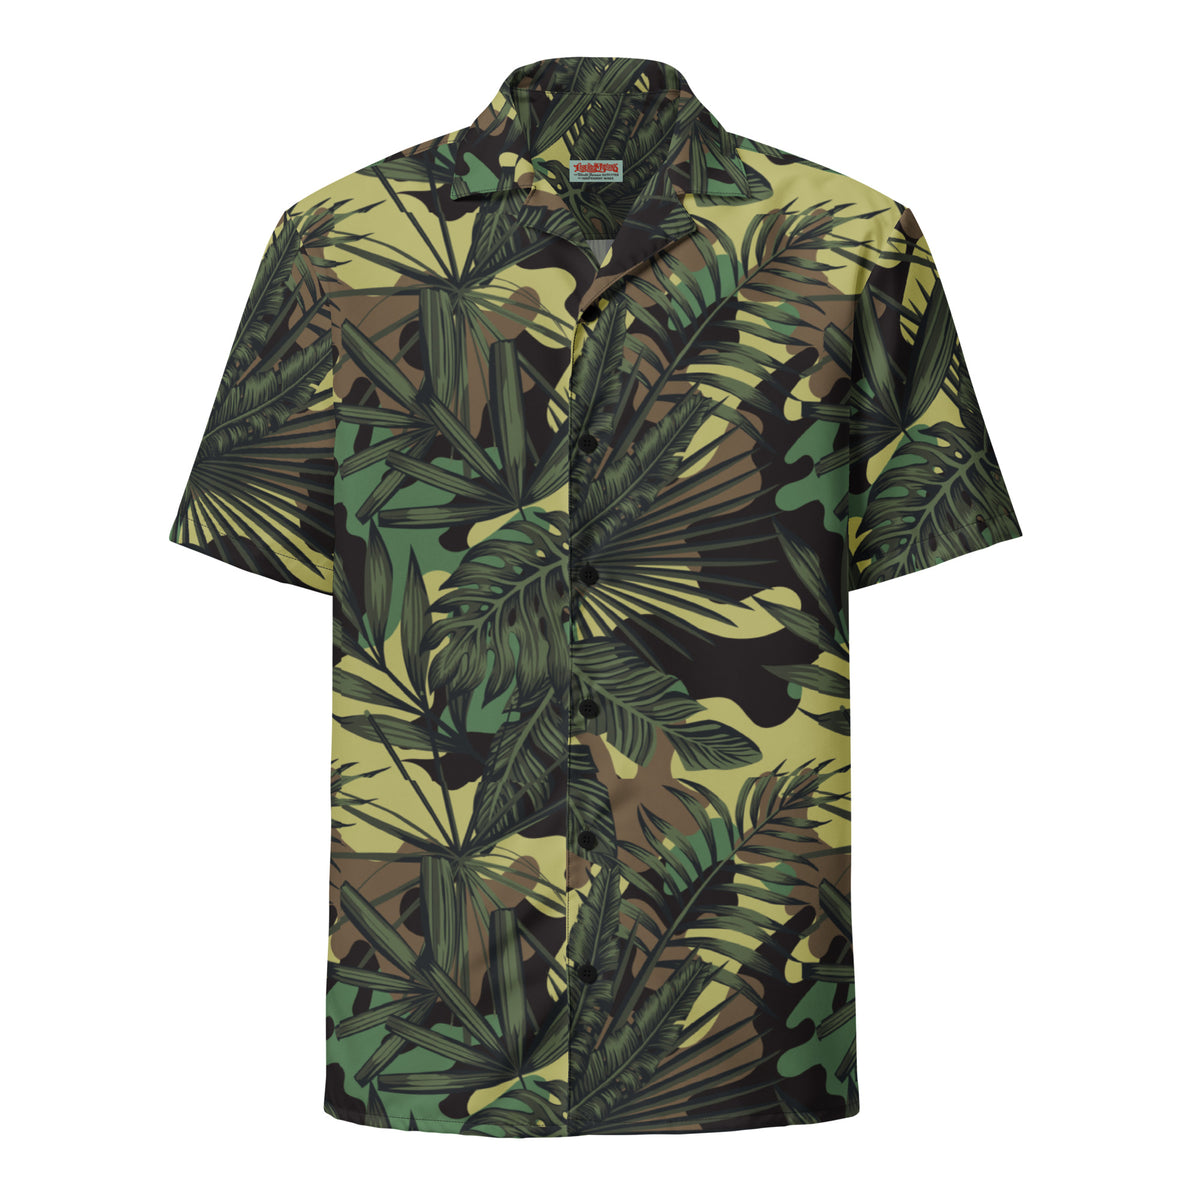 Tropicamo Commando Hawaiian Shirt